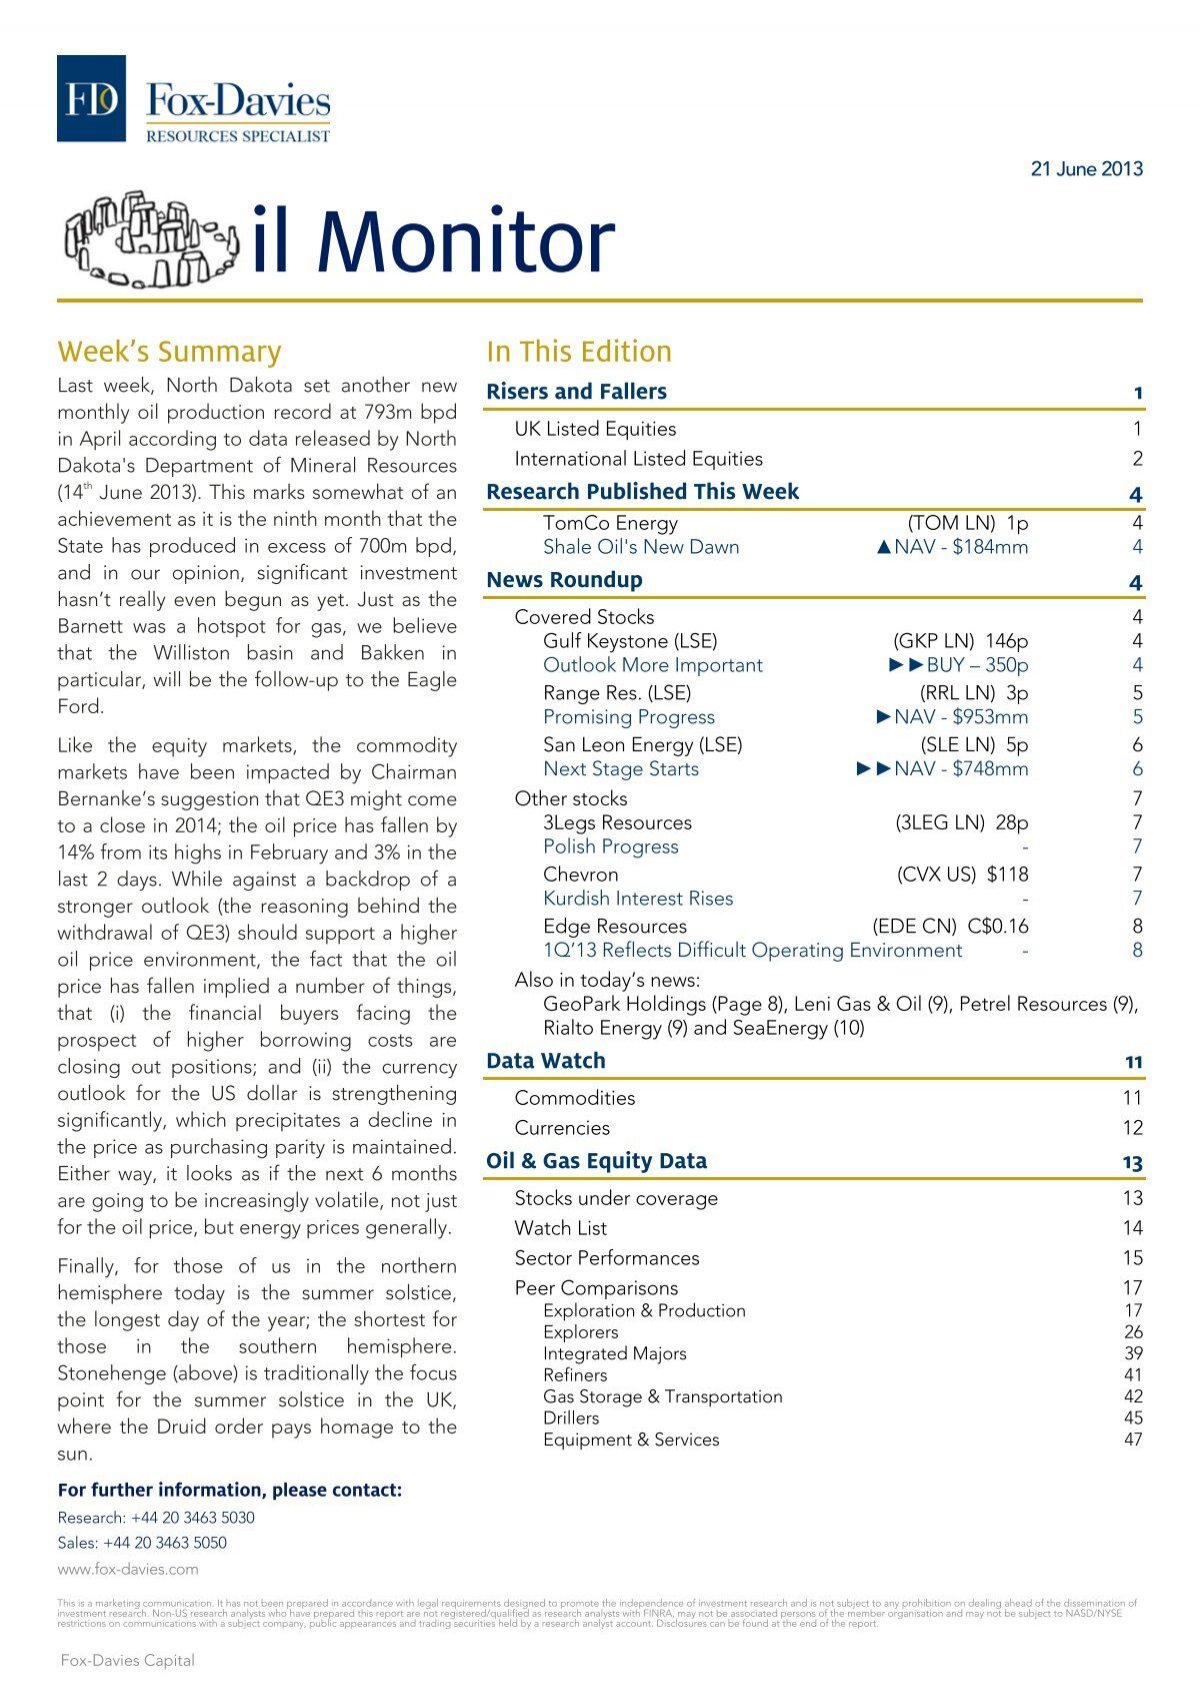 TONO-PEN XL and AVIA Service Bulletin Rev-A Nov 2011 PDF download